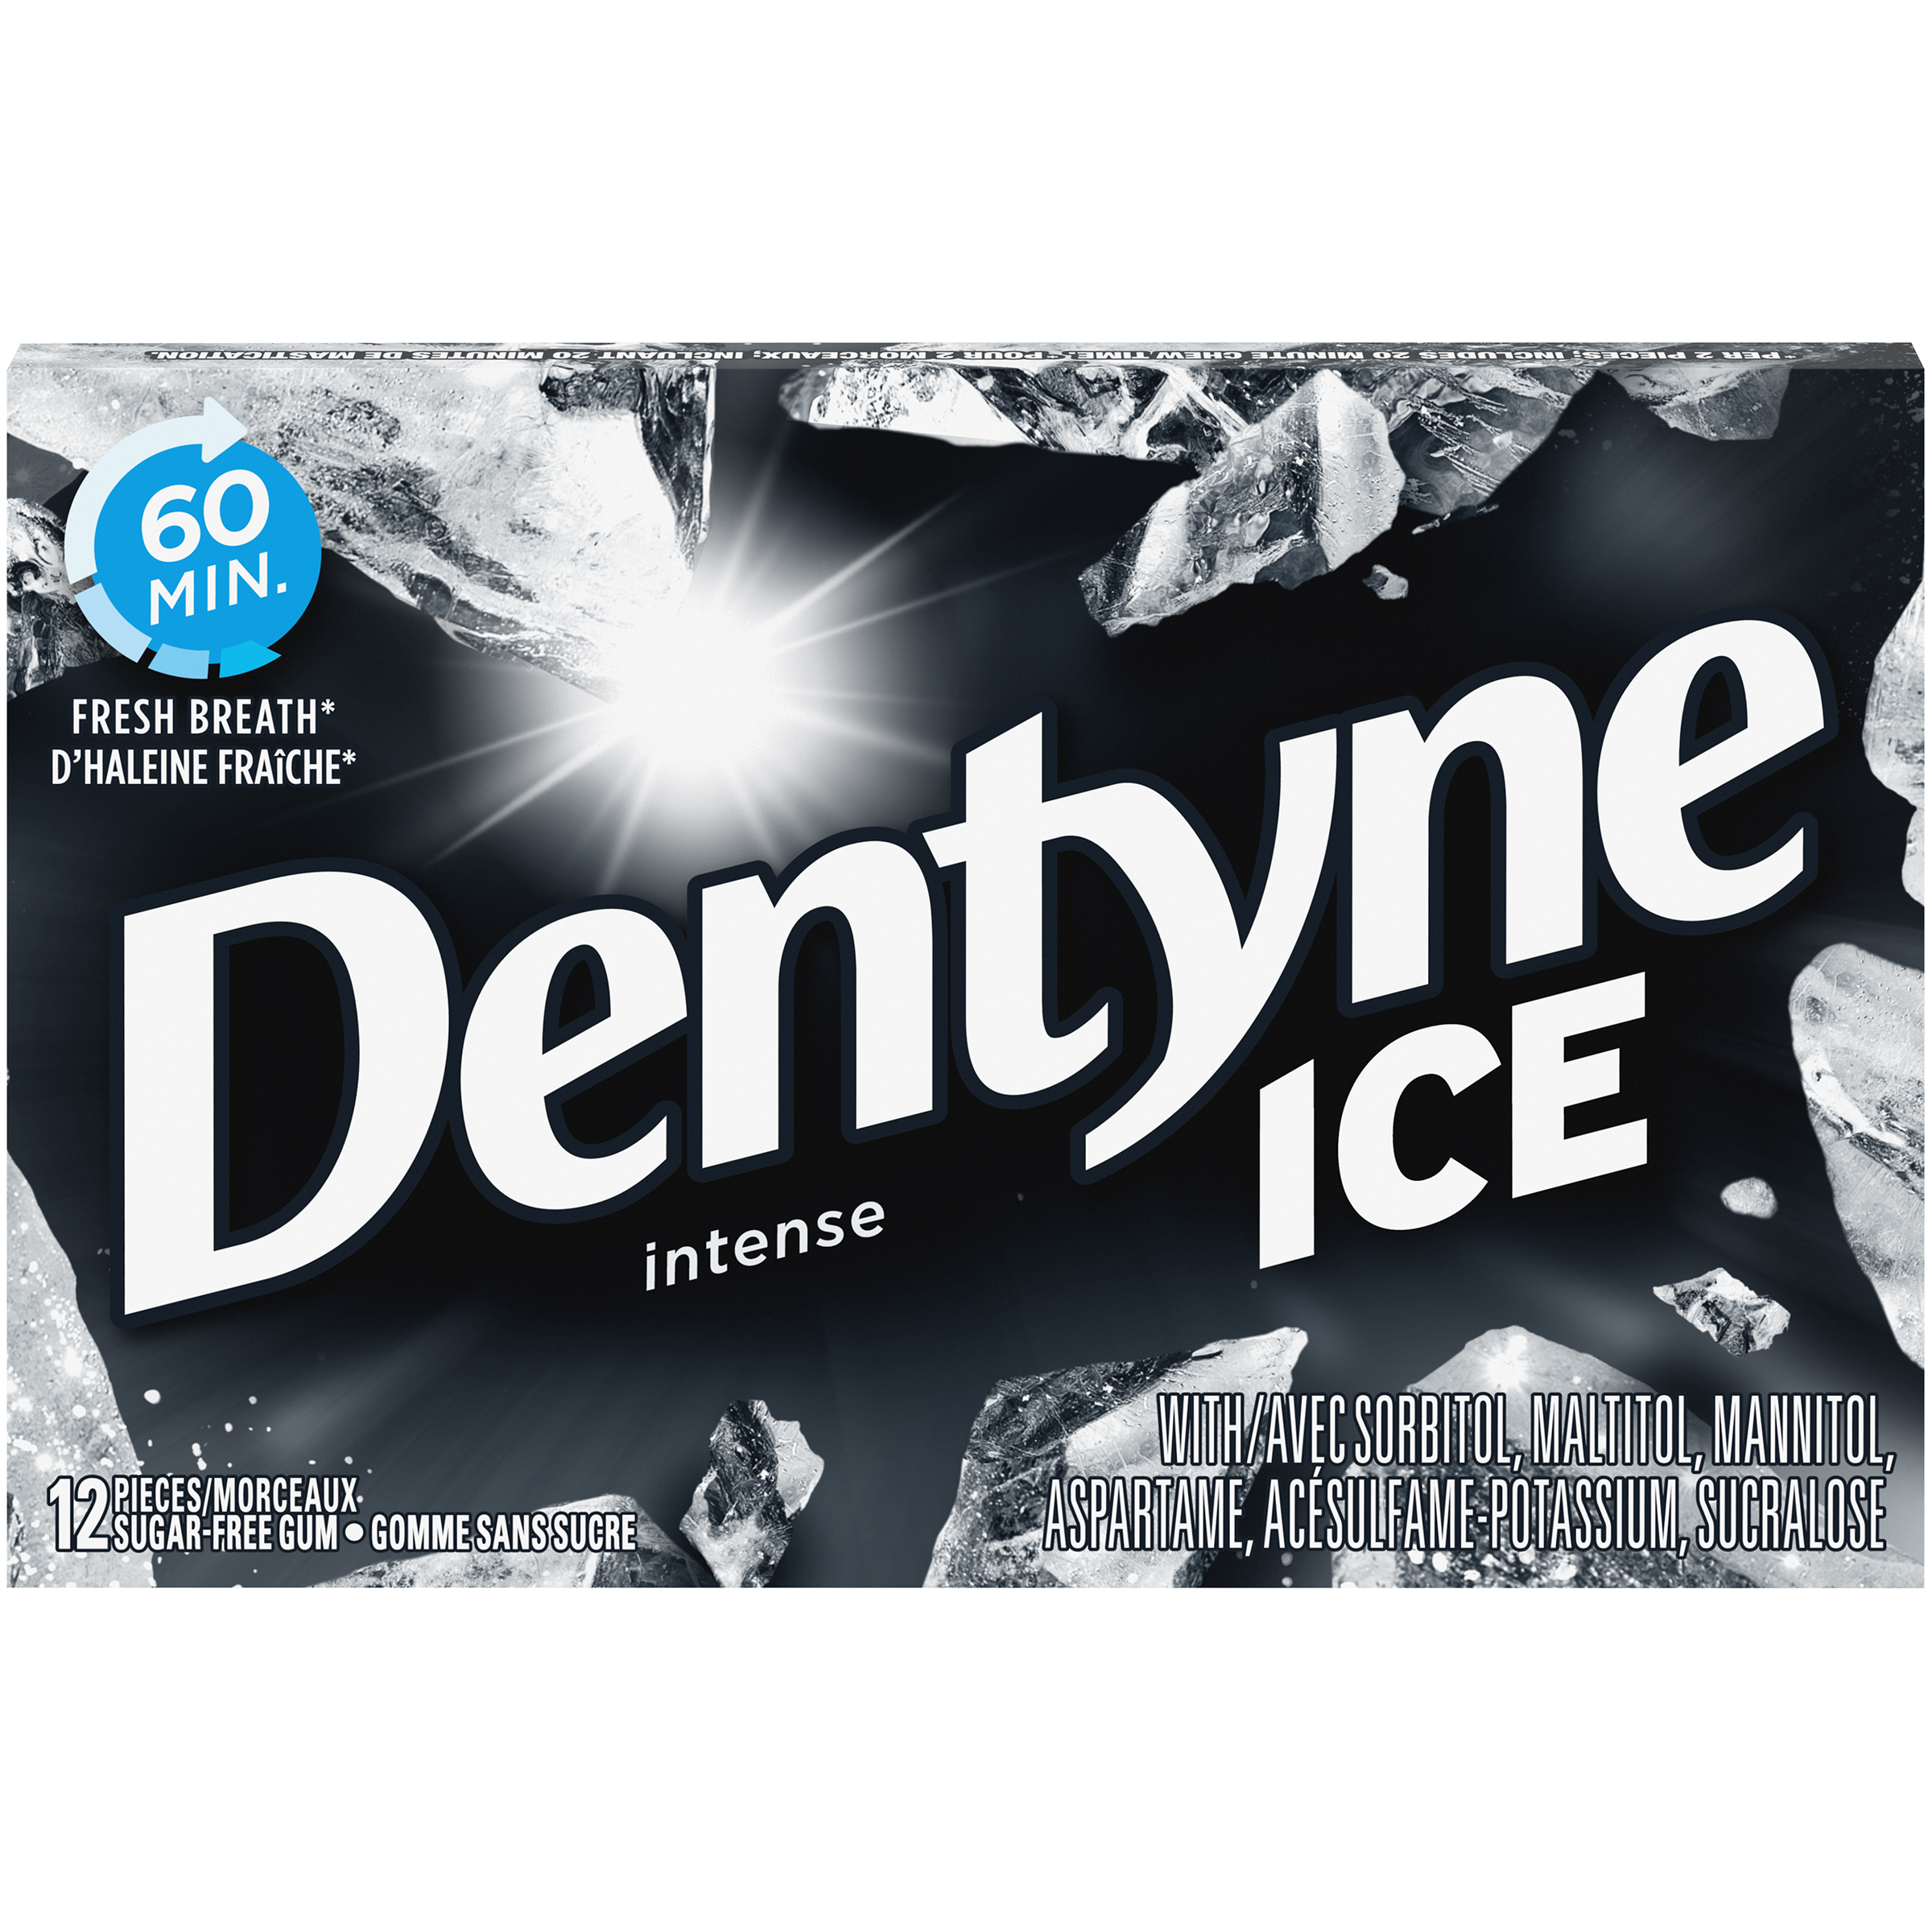 Dentyne Ice Intense Gum 12 Count